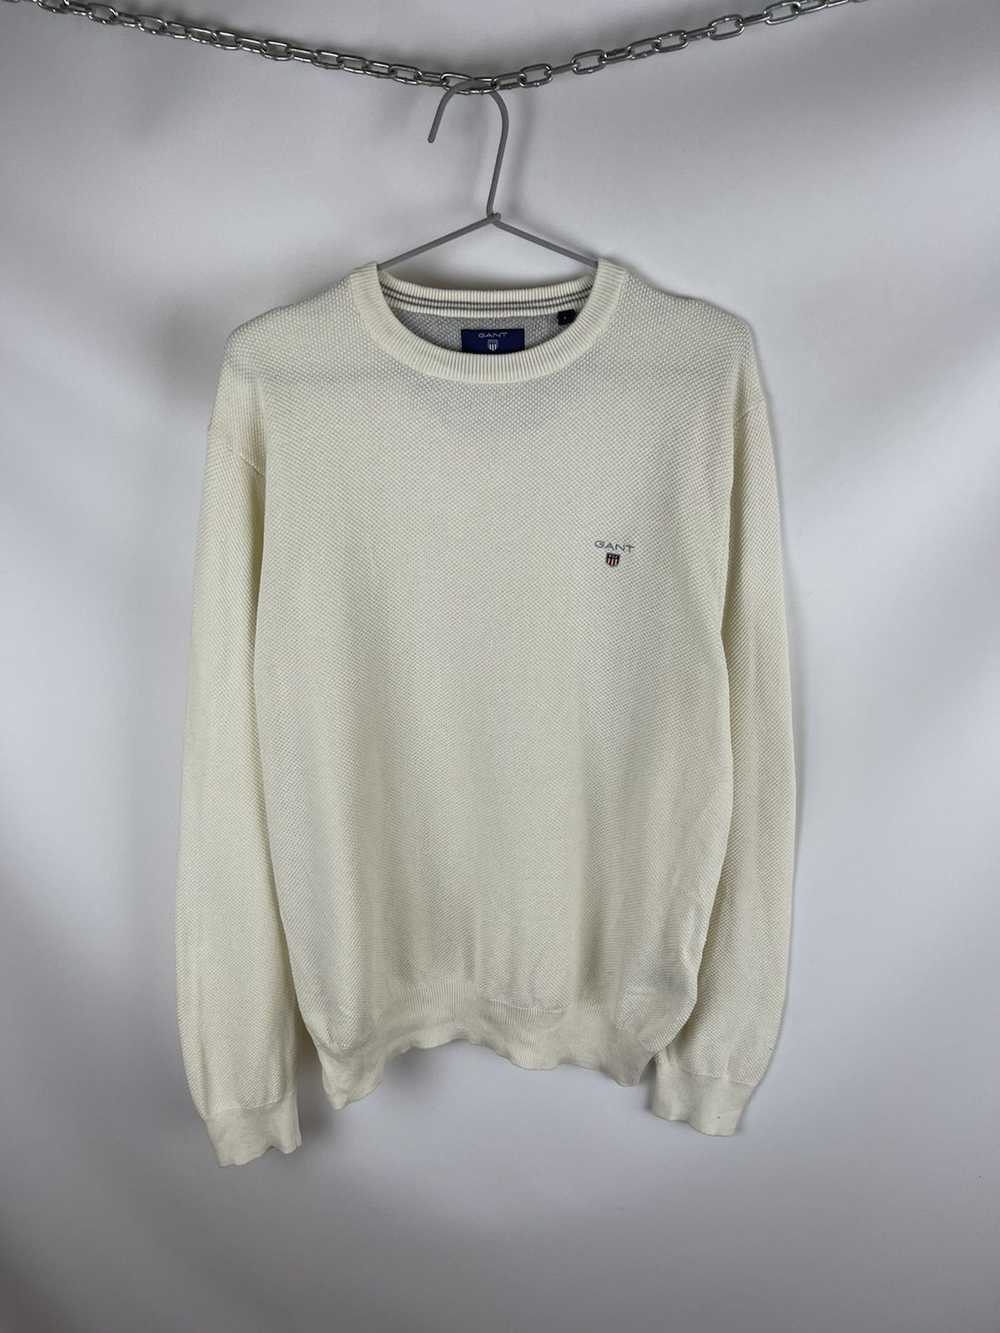 Gant Gant Premium Cotton knitted light sweater - image 2